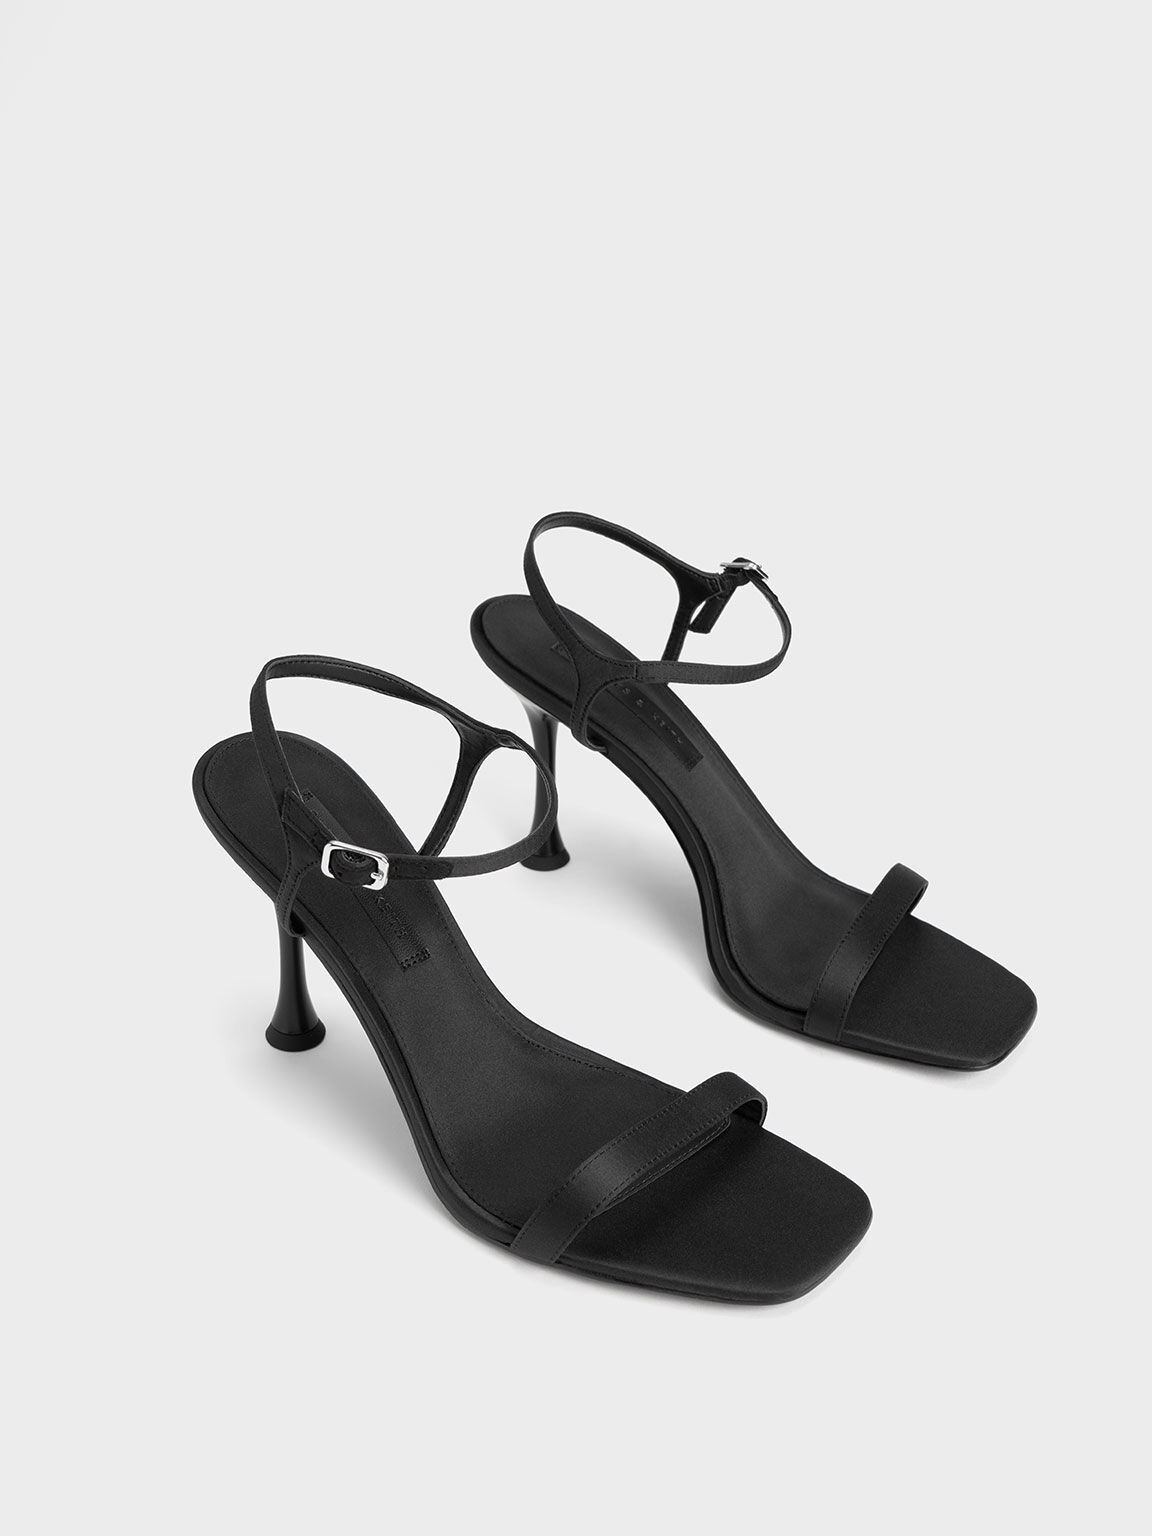 Black Spool Heel Satin Sandals - CHARLES & KEITH US